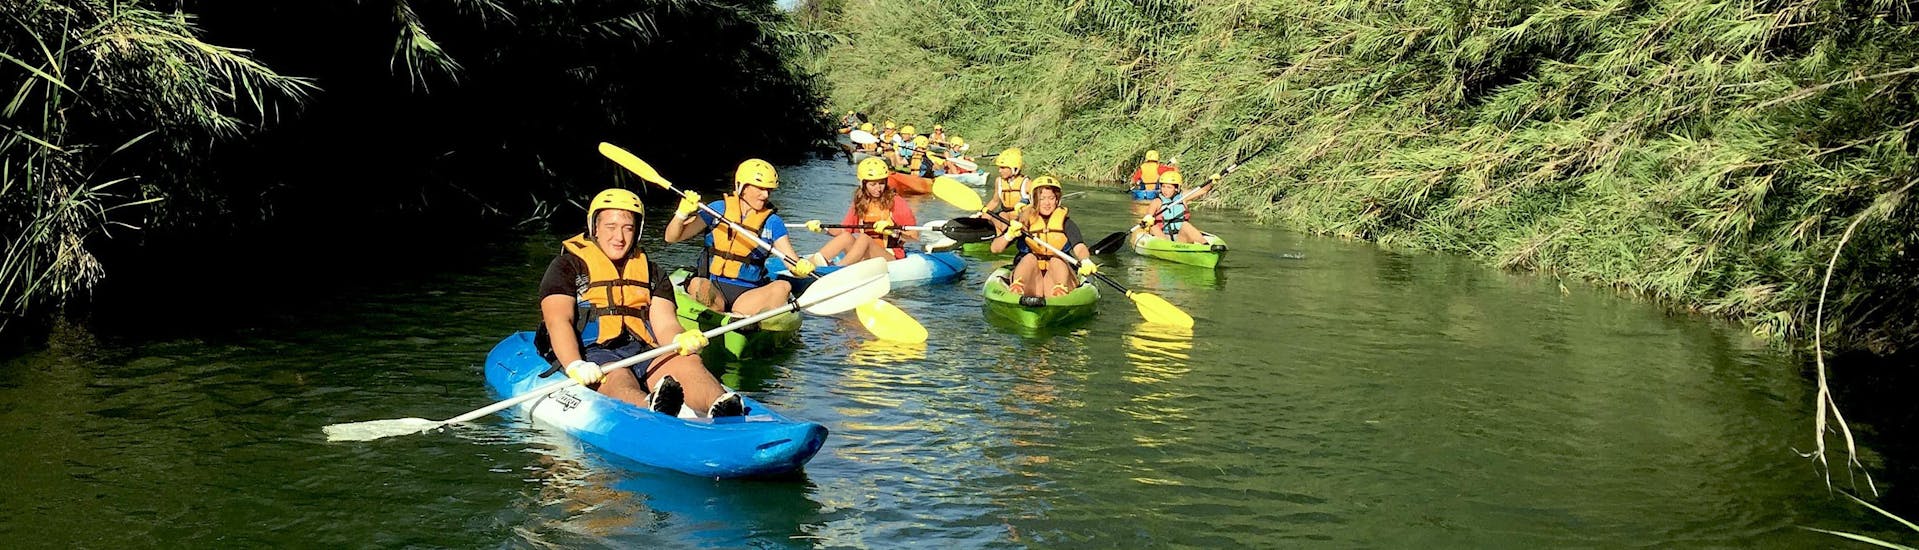 Kayak e canoa facile - Rio Túria.